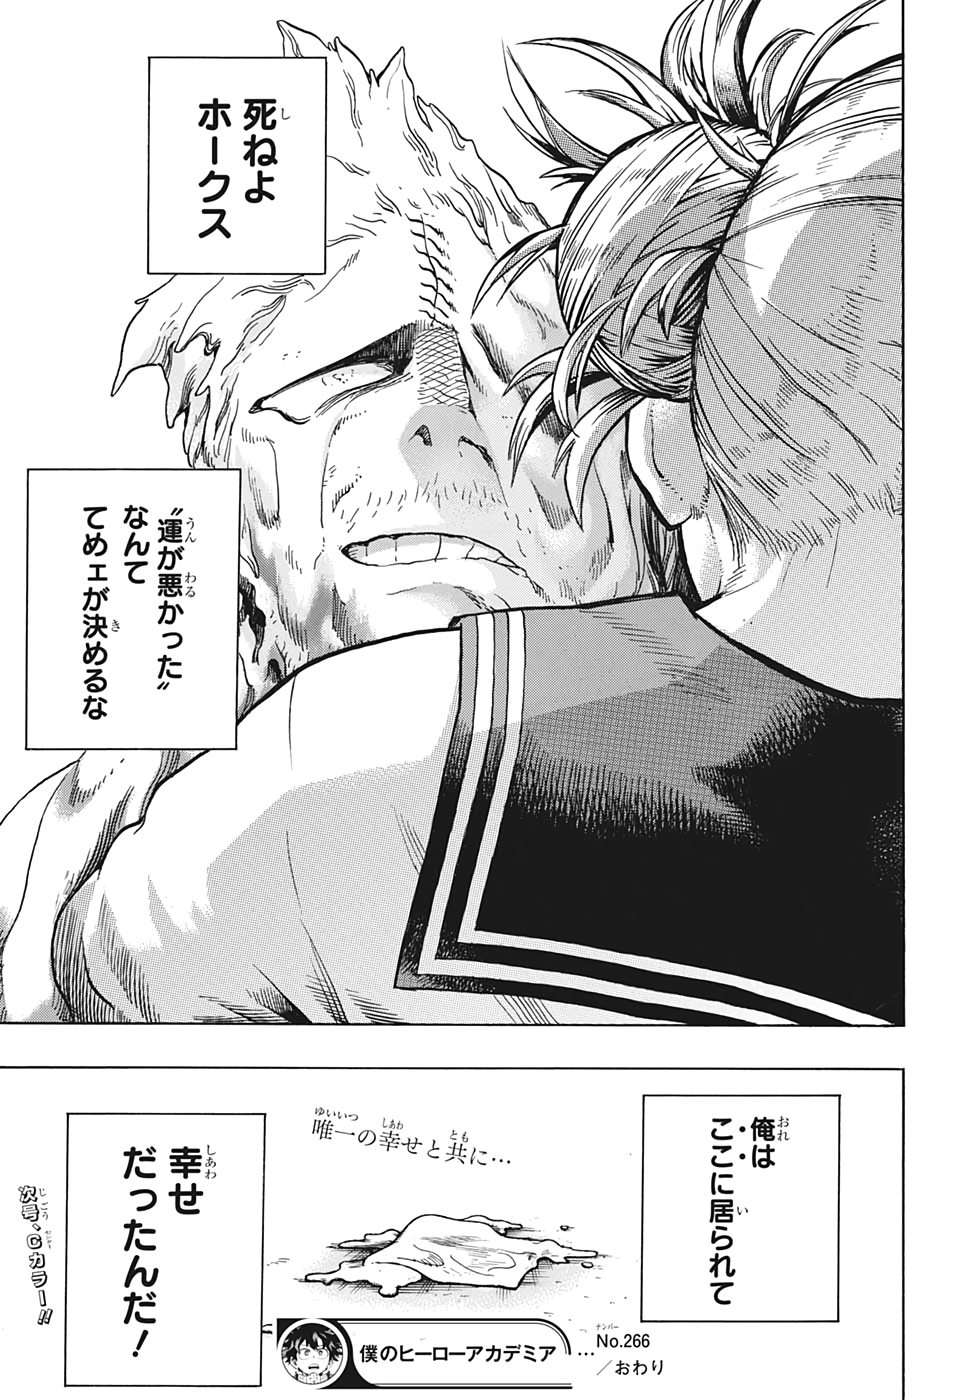 Boku no Hero Academia - Chapter 266 - Page 19